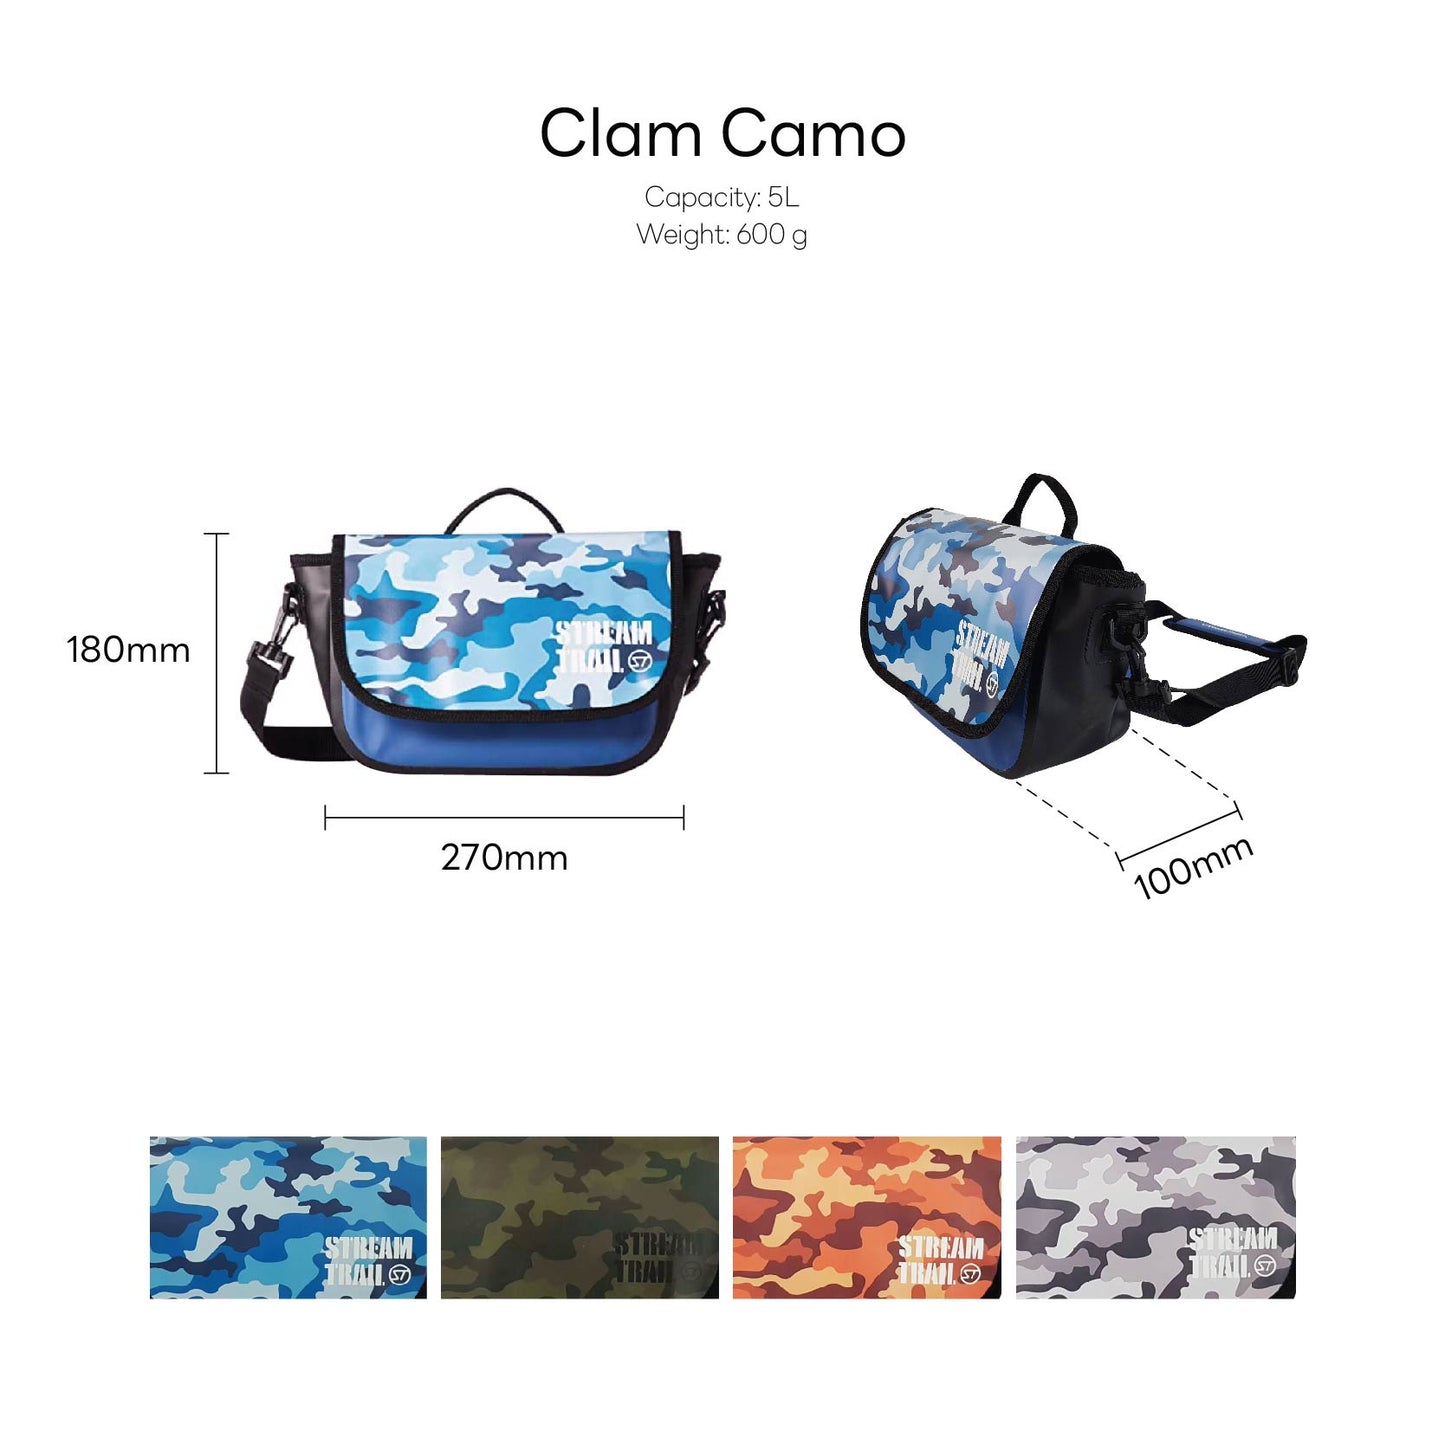 Outlet Splash Defender Clam Camo